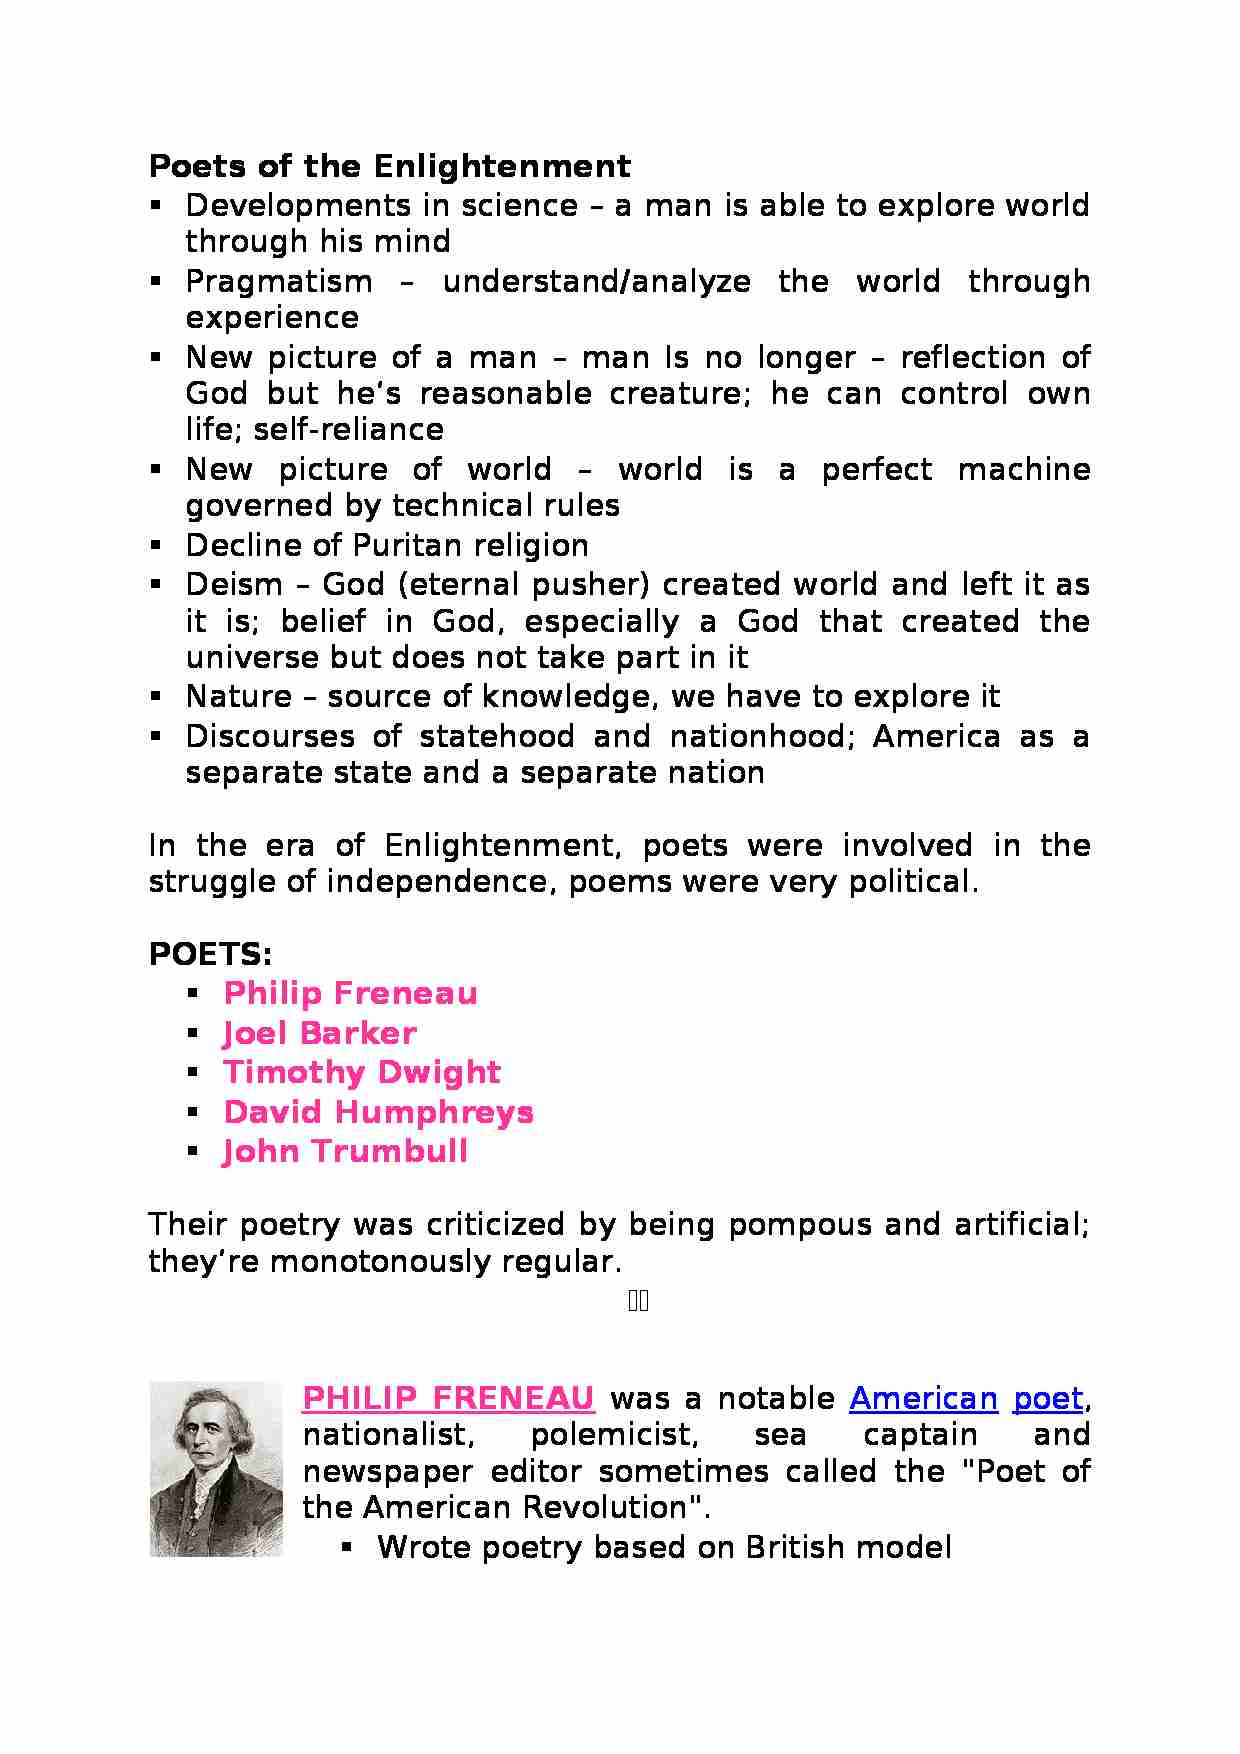 Poets of the Enlightenment-opracowanie - strona 1